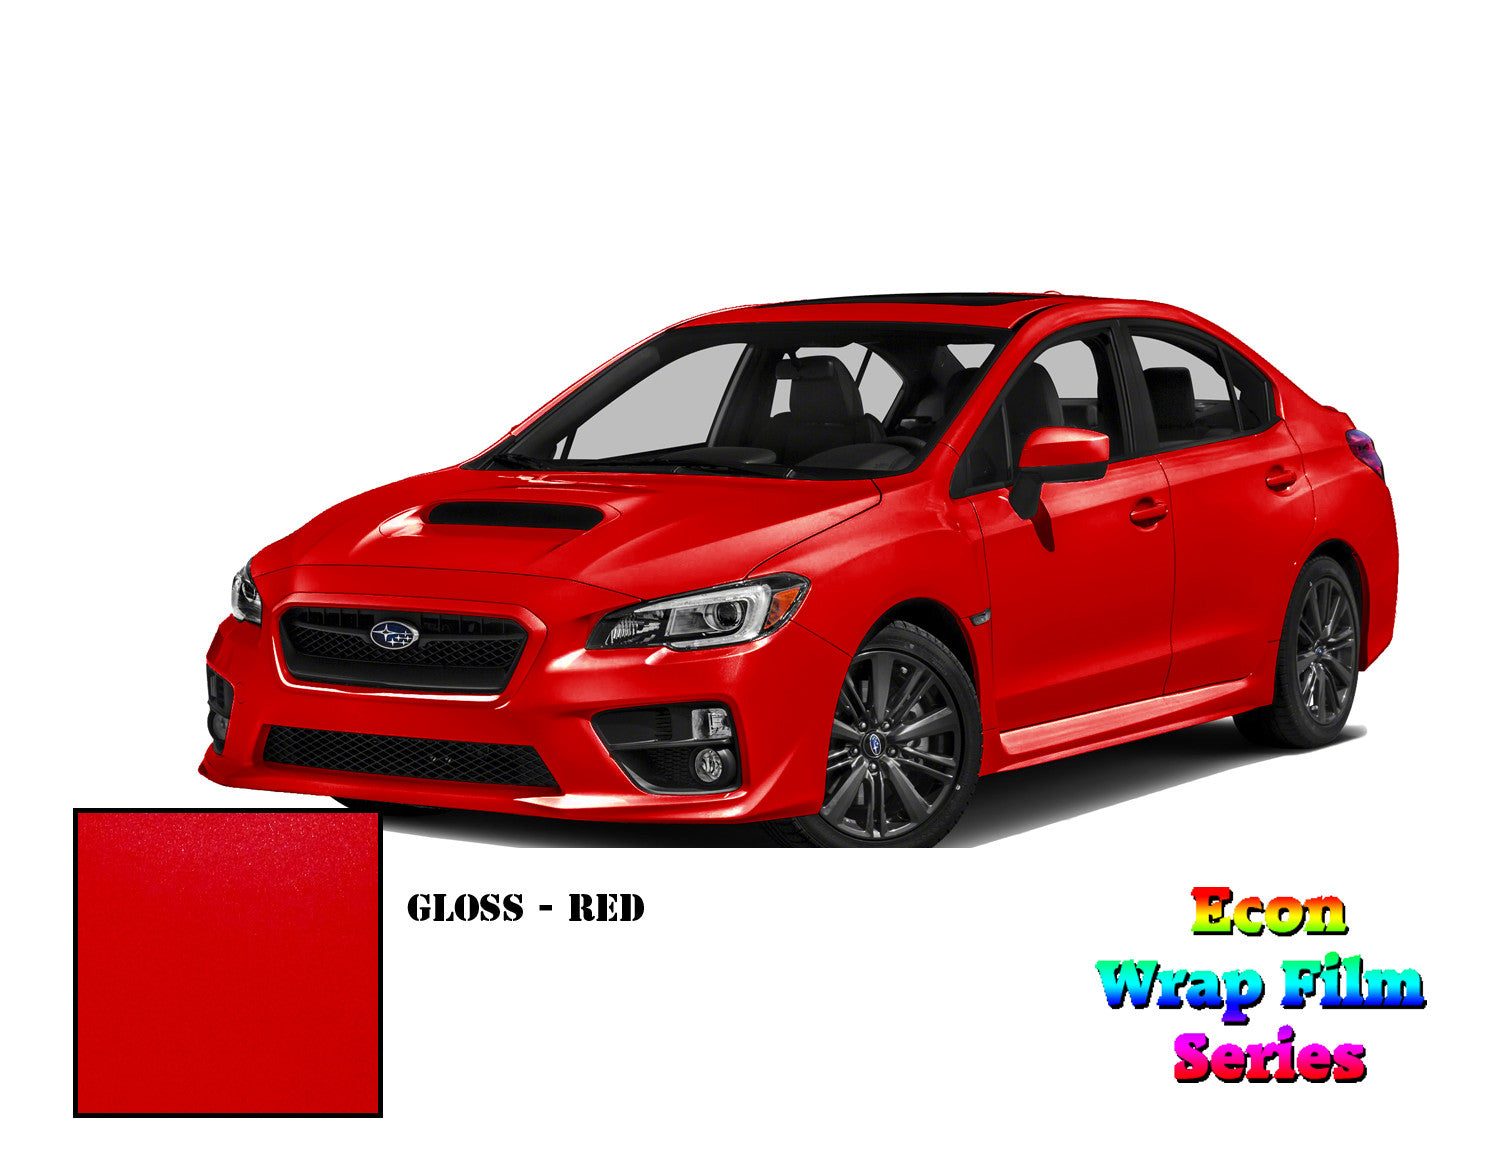 Econ Wrap Film Series - Gloss Red - Hachi Auto